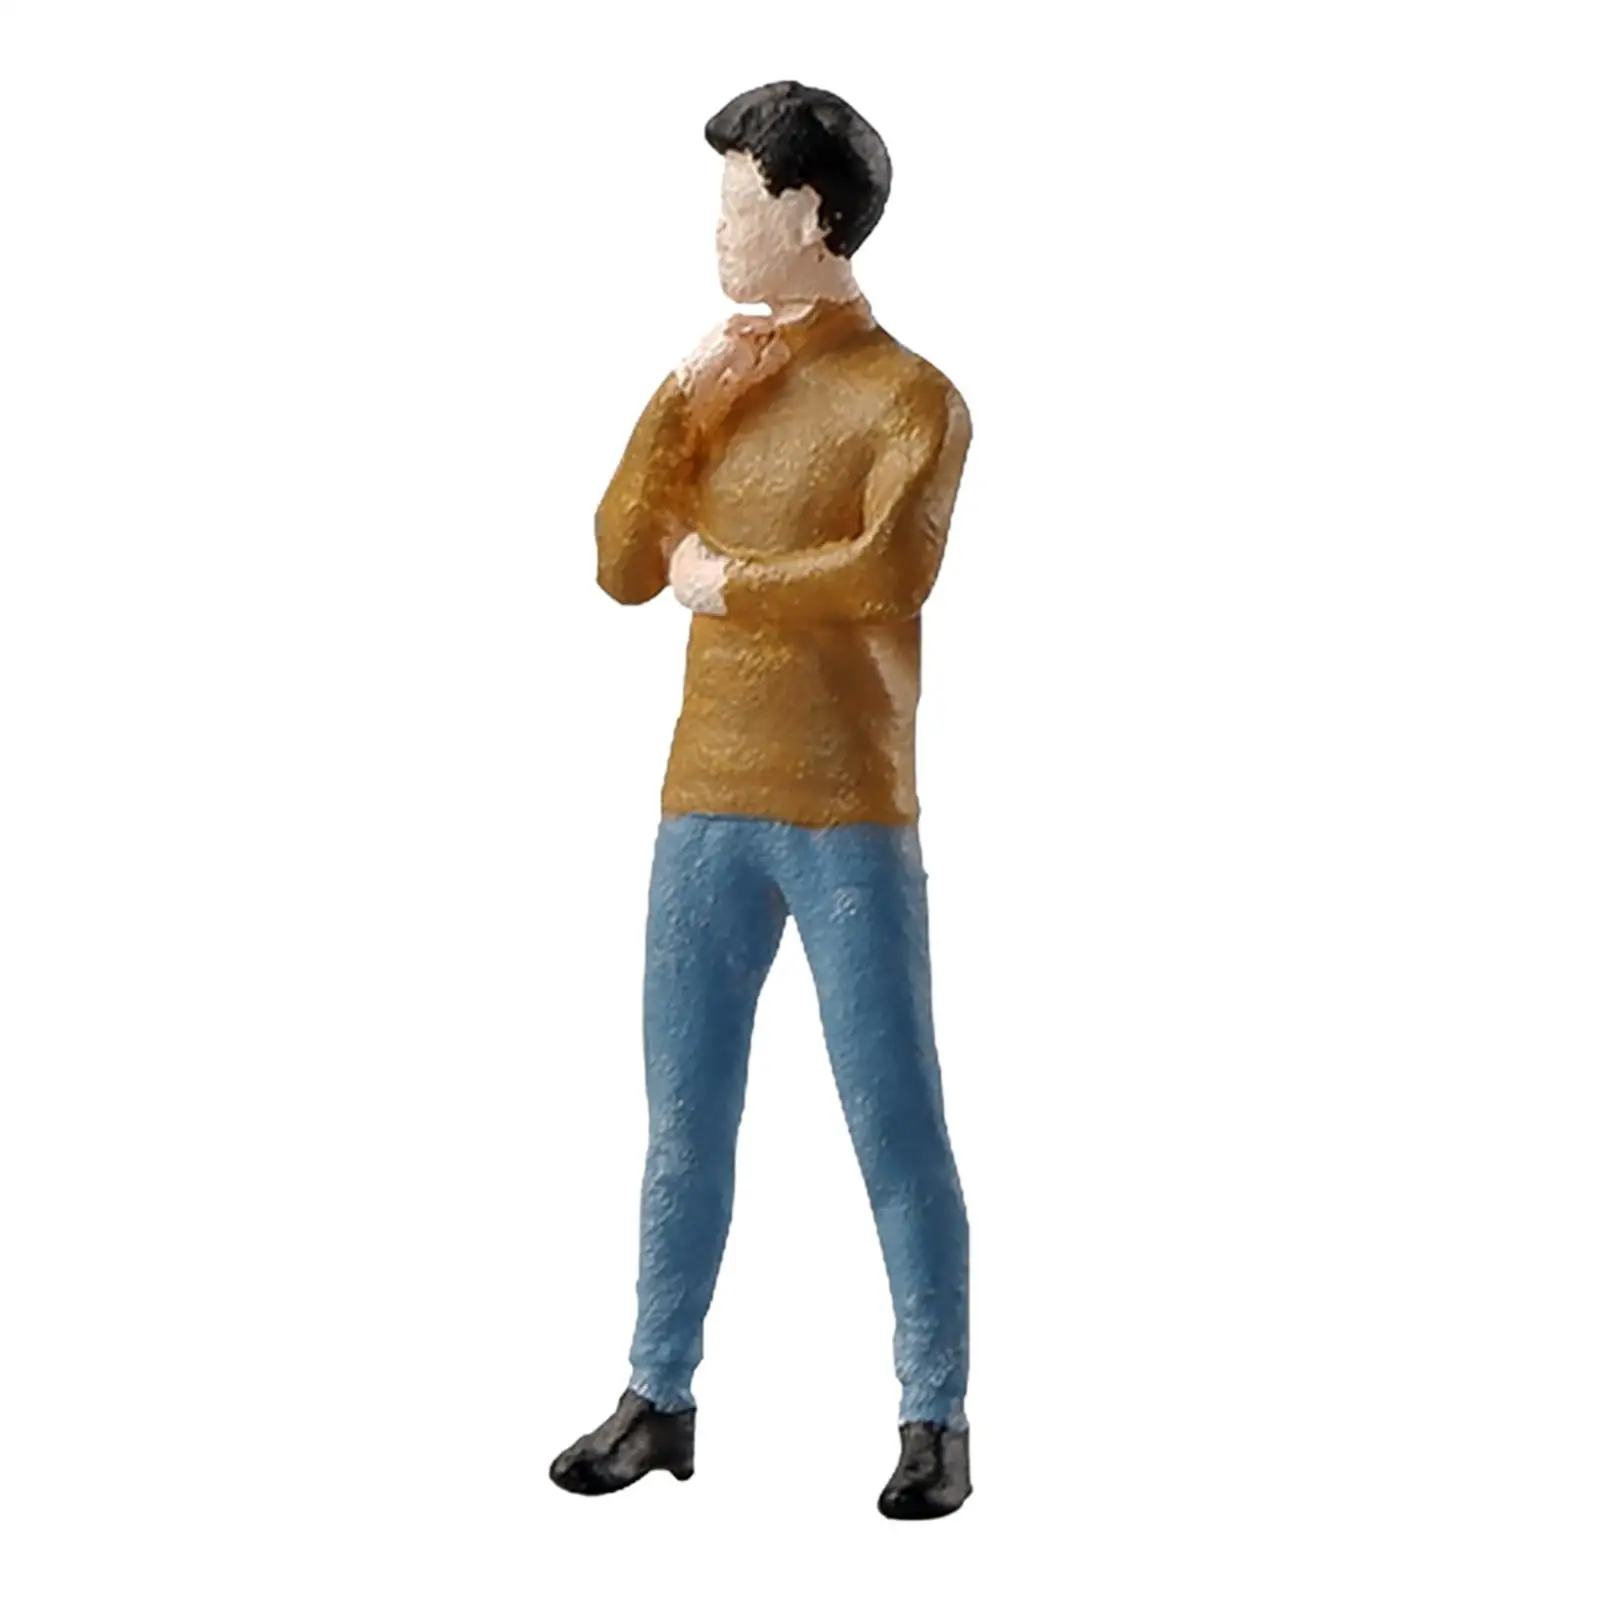 1/64 Scale Diorama Figure Miniature Model Dollhouse Decor Thinker Man for Fariy Garden